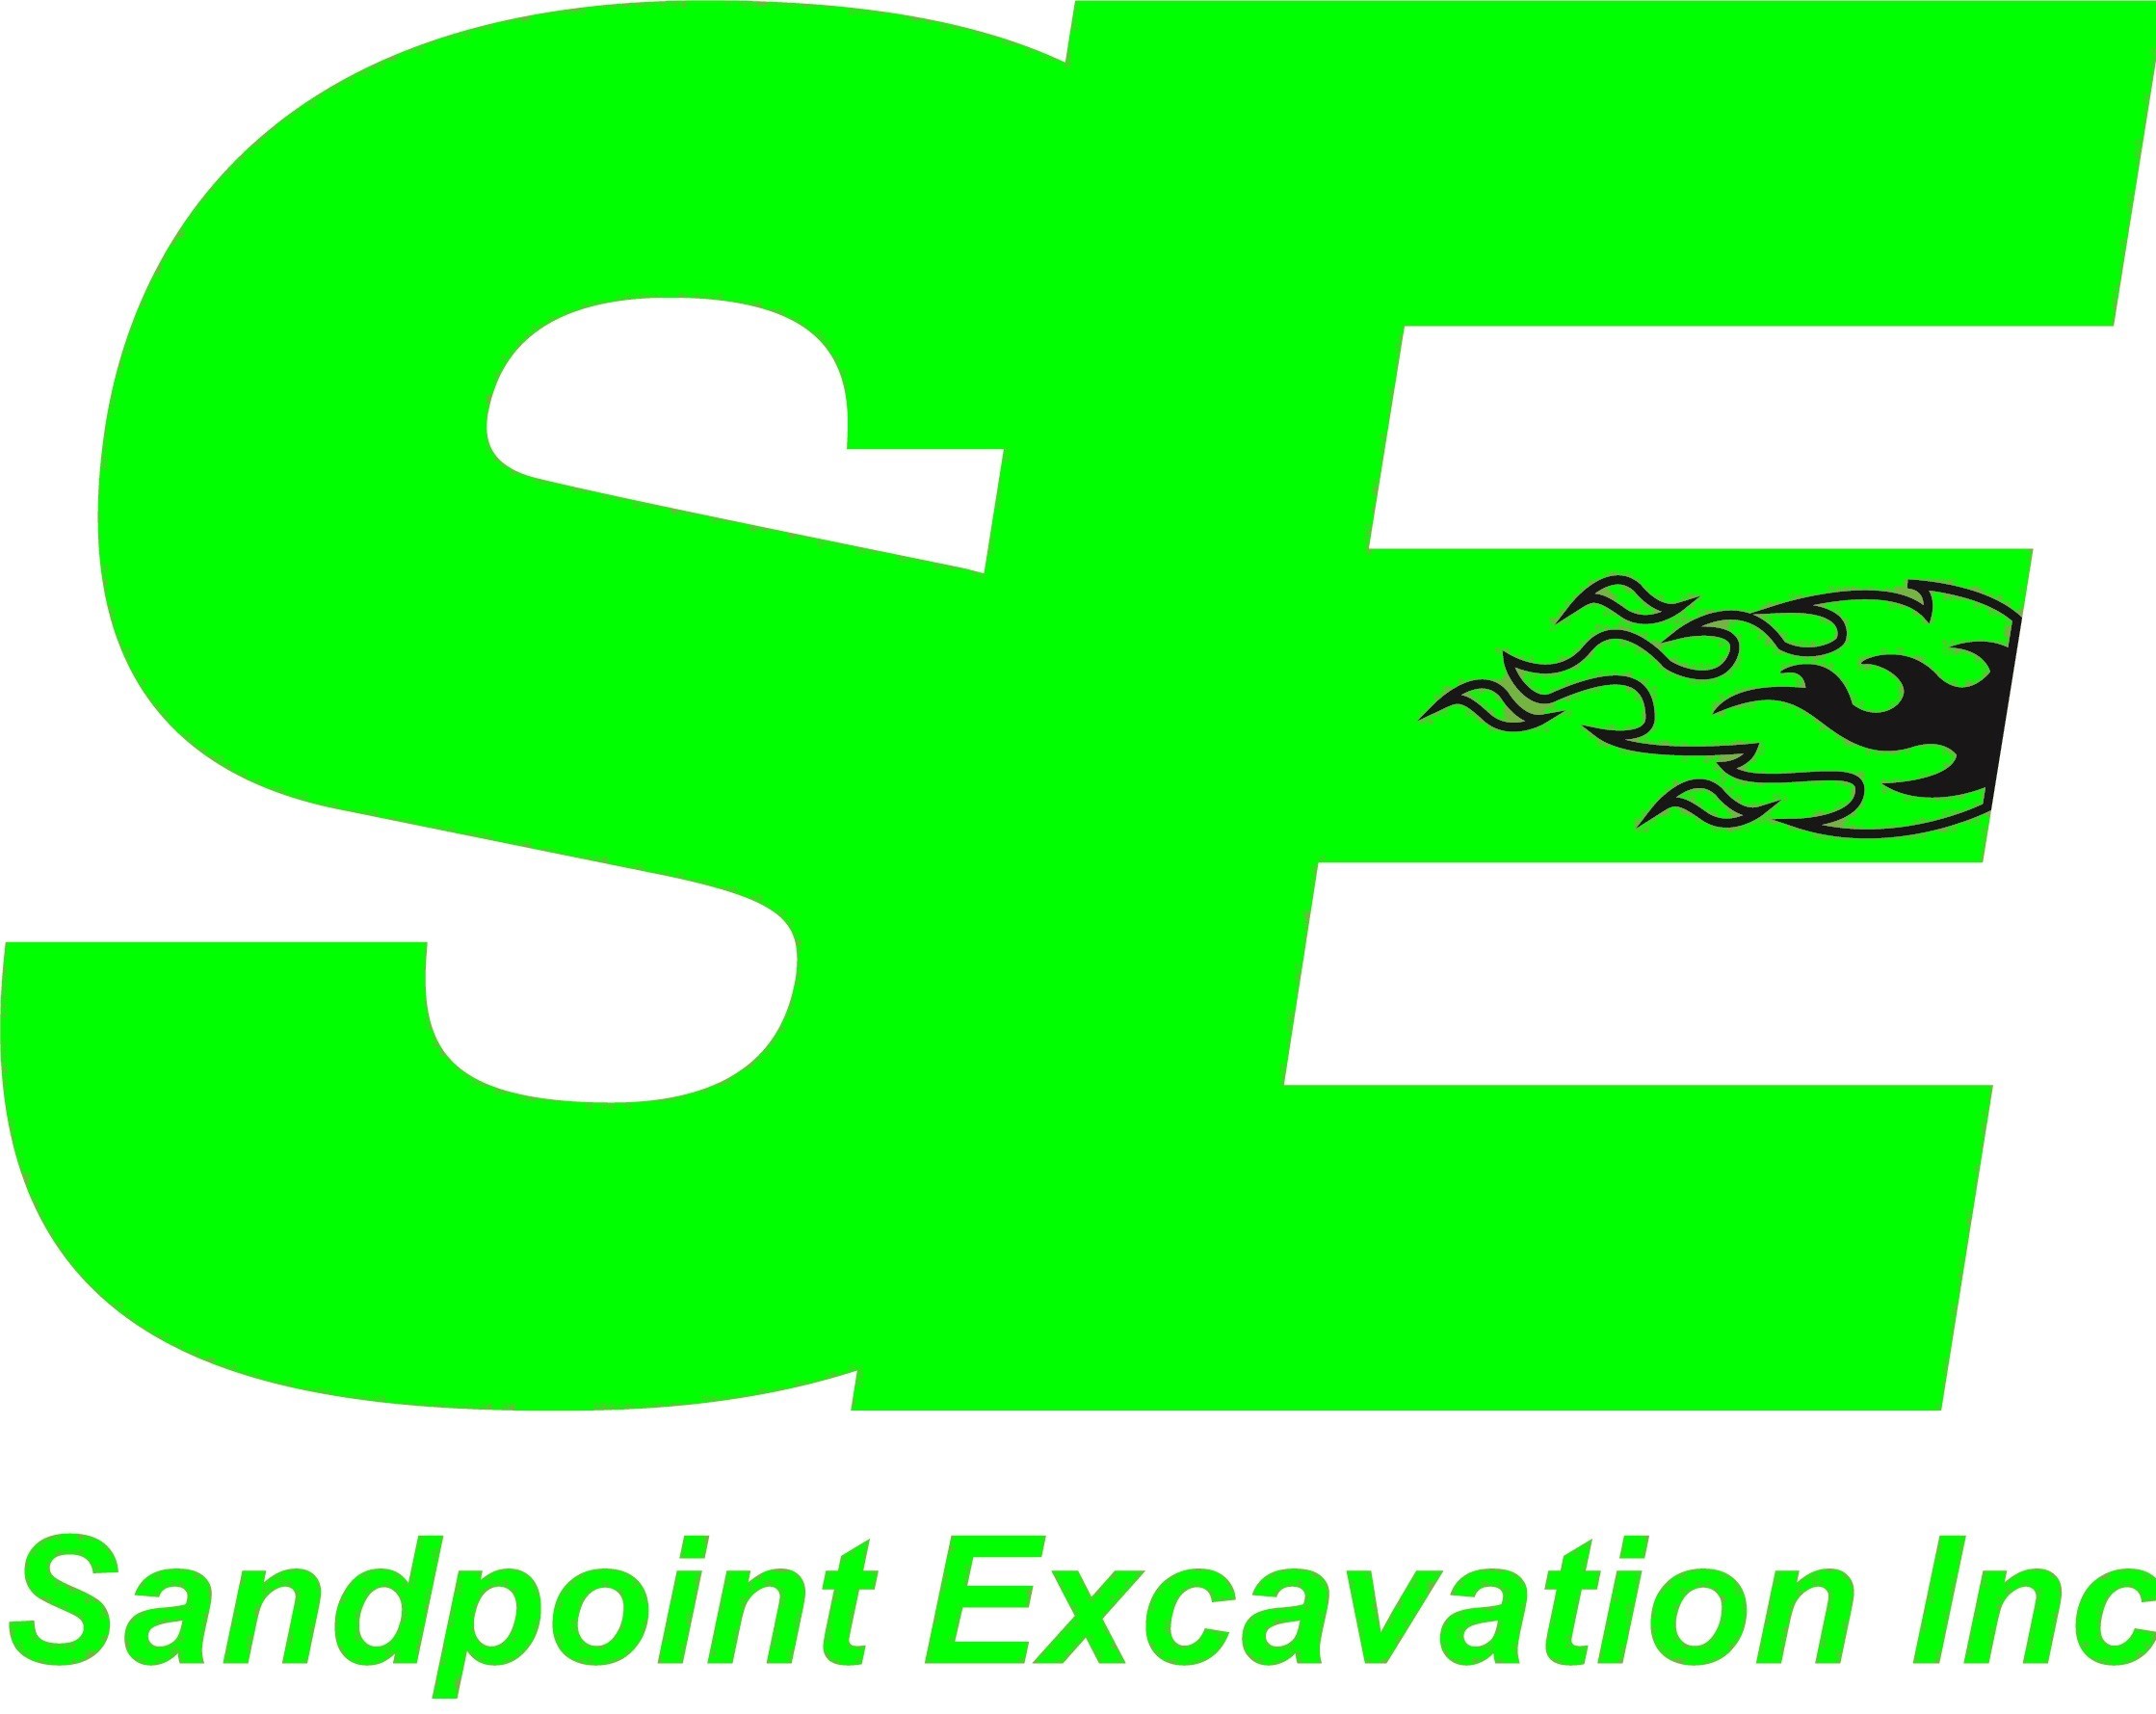 Sandpoint Excavation Inc